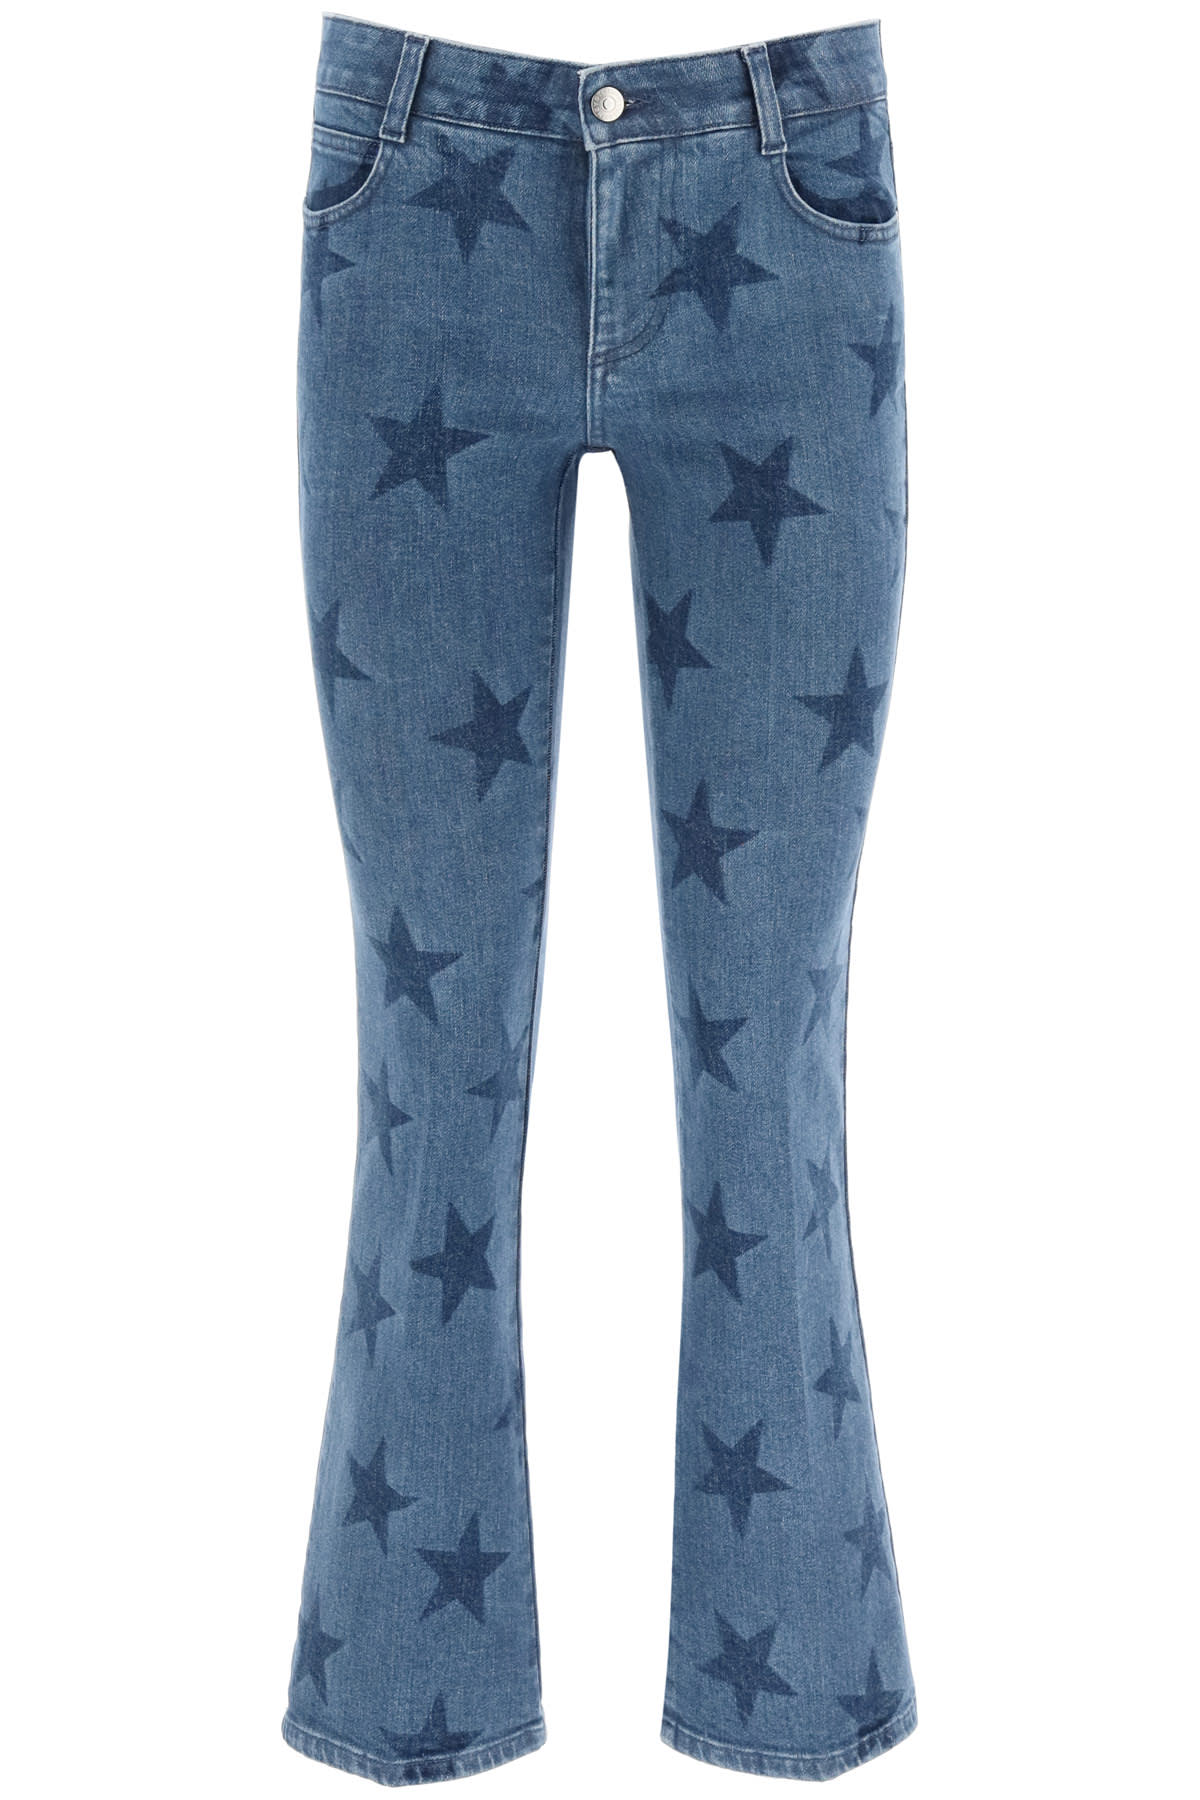 Stella McCartney Crop Flare Jeans With Stars Print